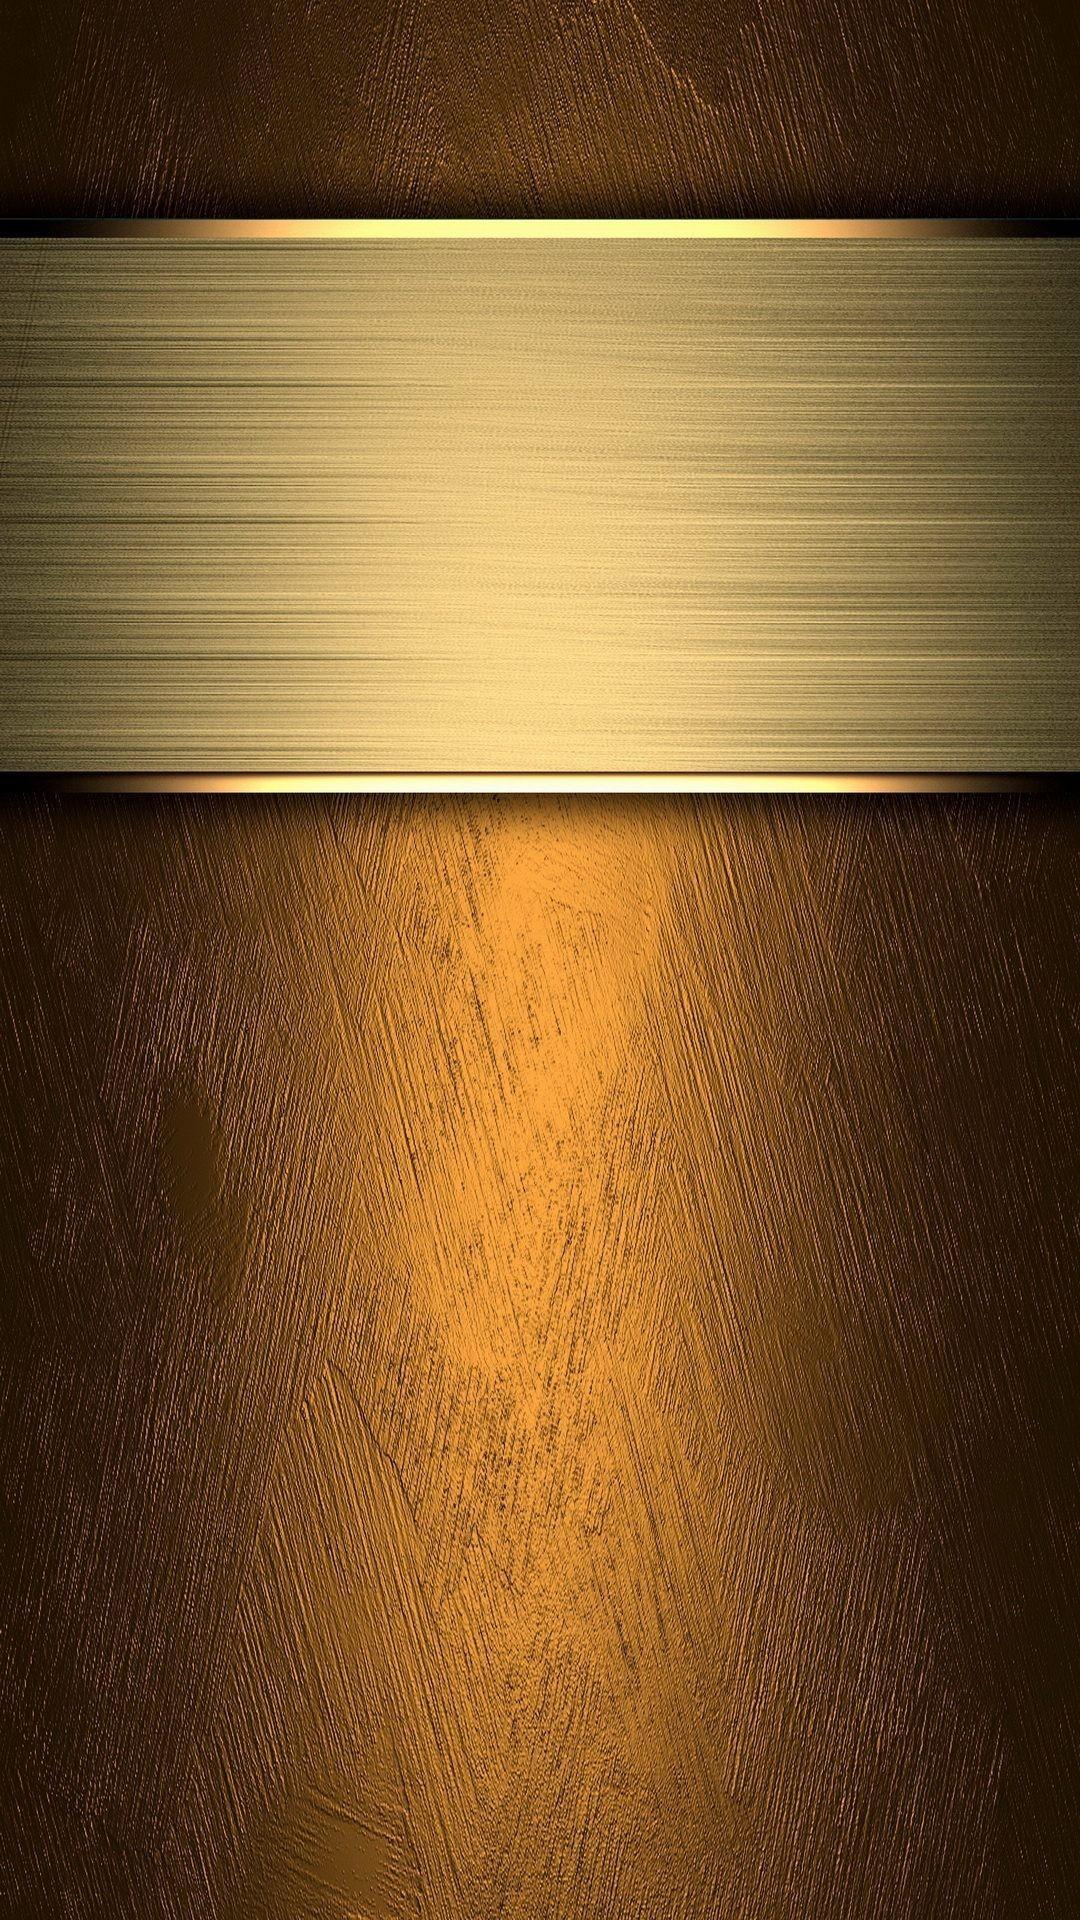 IPhone 6 Gold Wallpaper